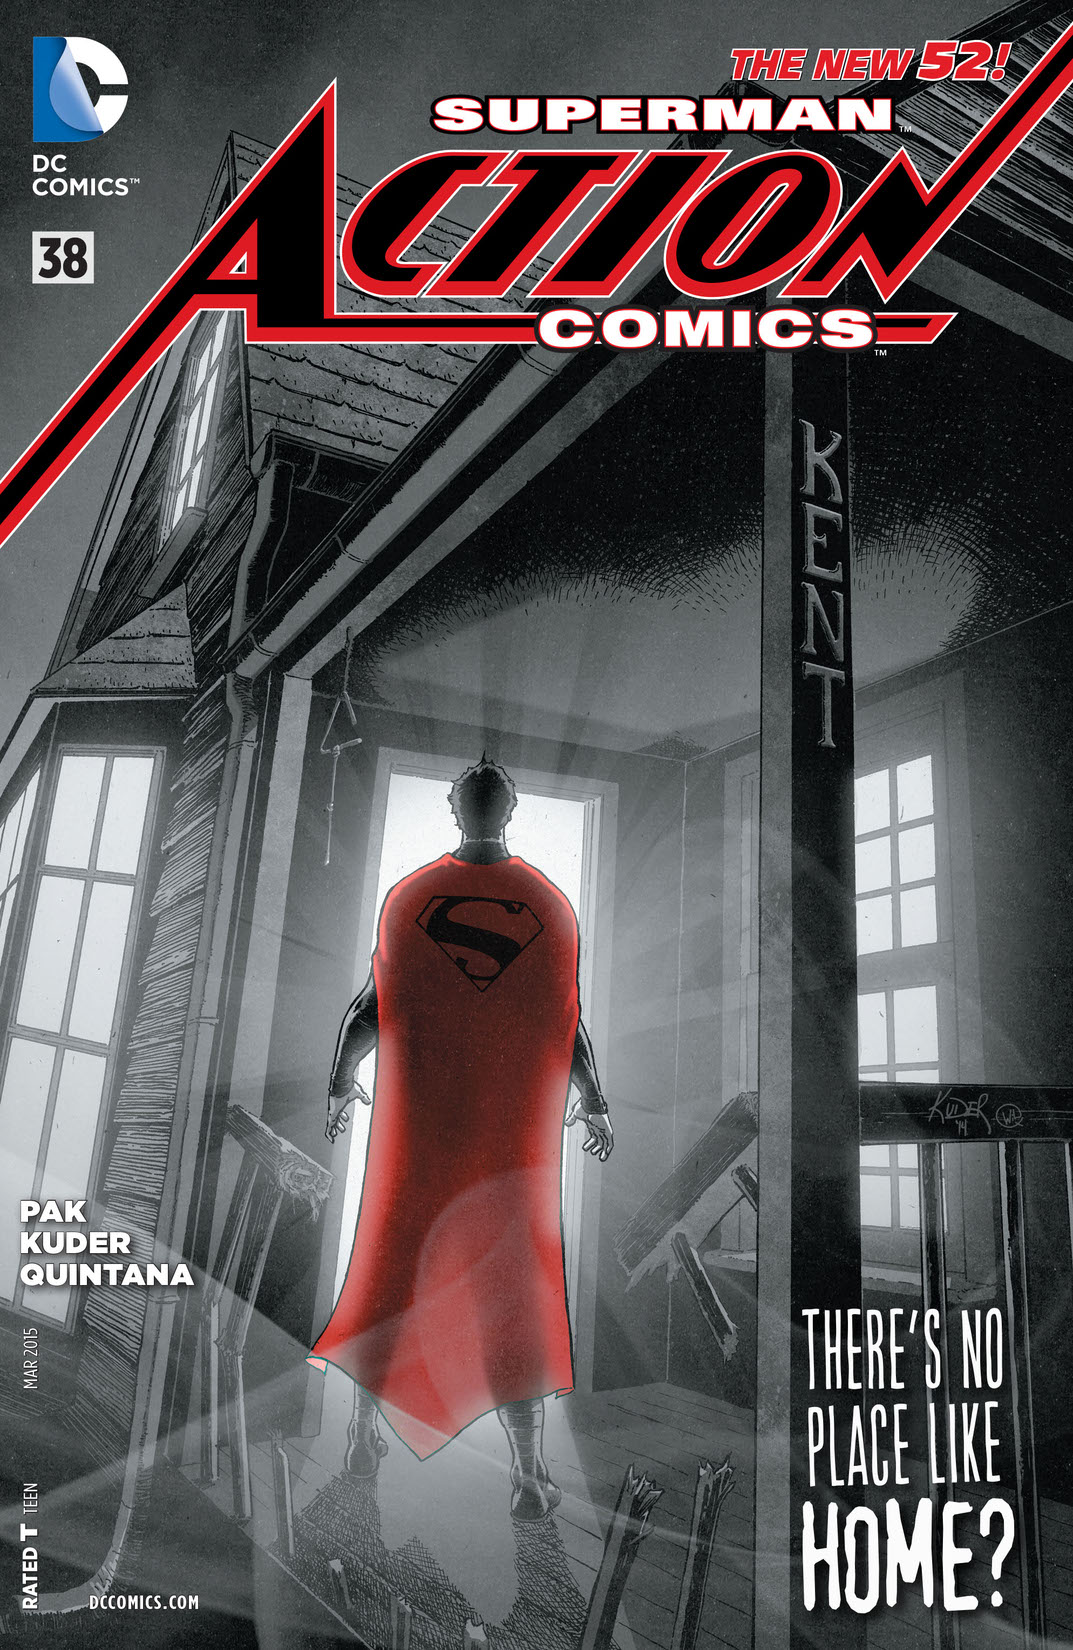 Action Comics (2011-) #38 preview images